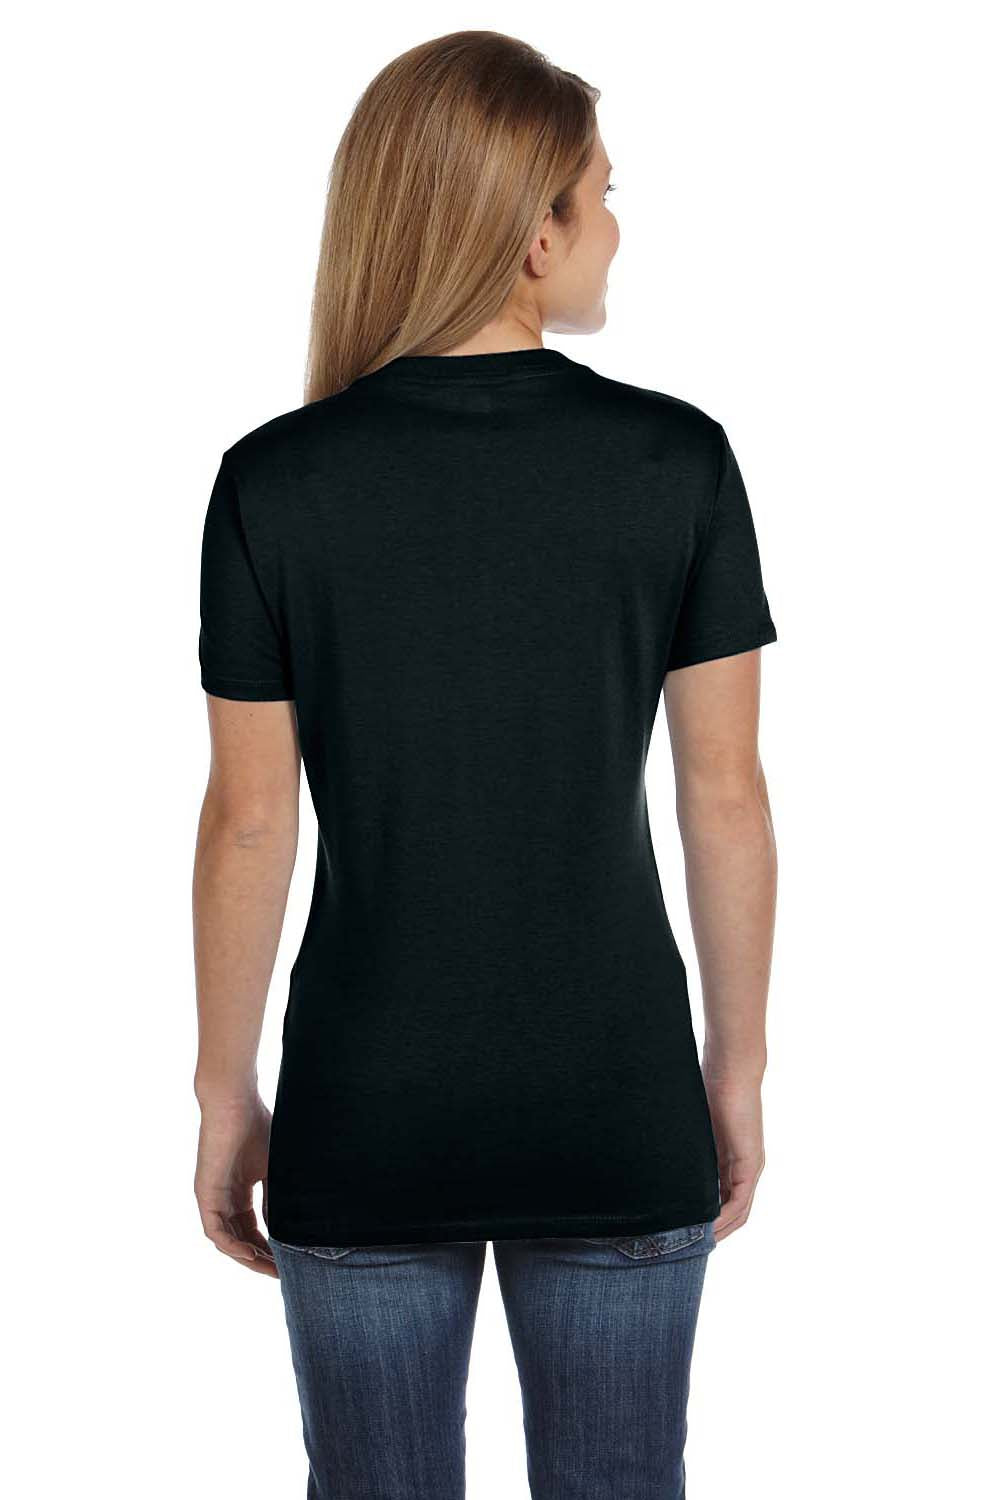 Hanes S04V Womens Nano-T Short Sleeve V-Neck T-Shirt Black Back